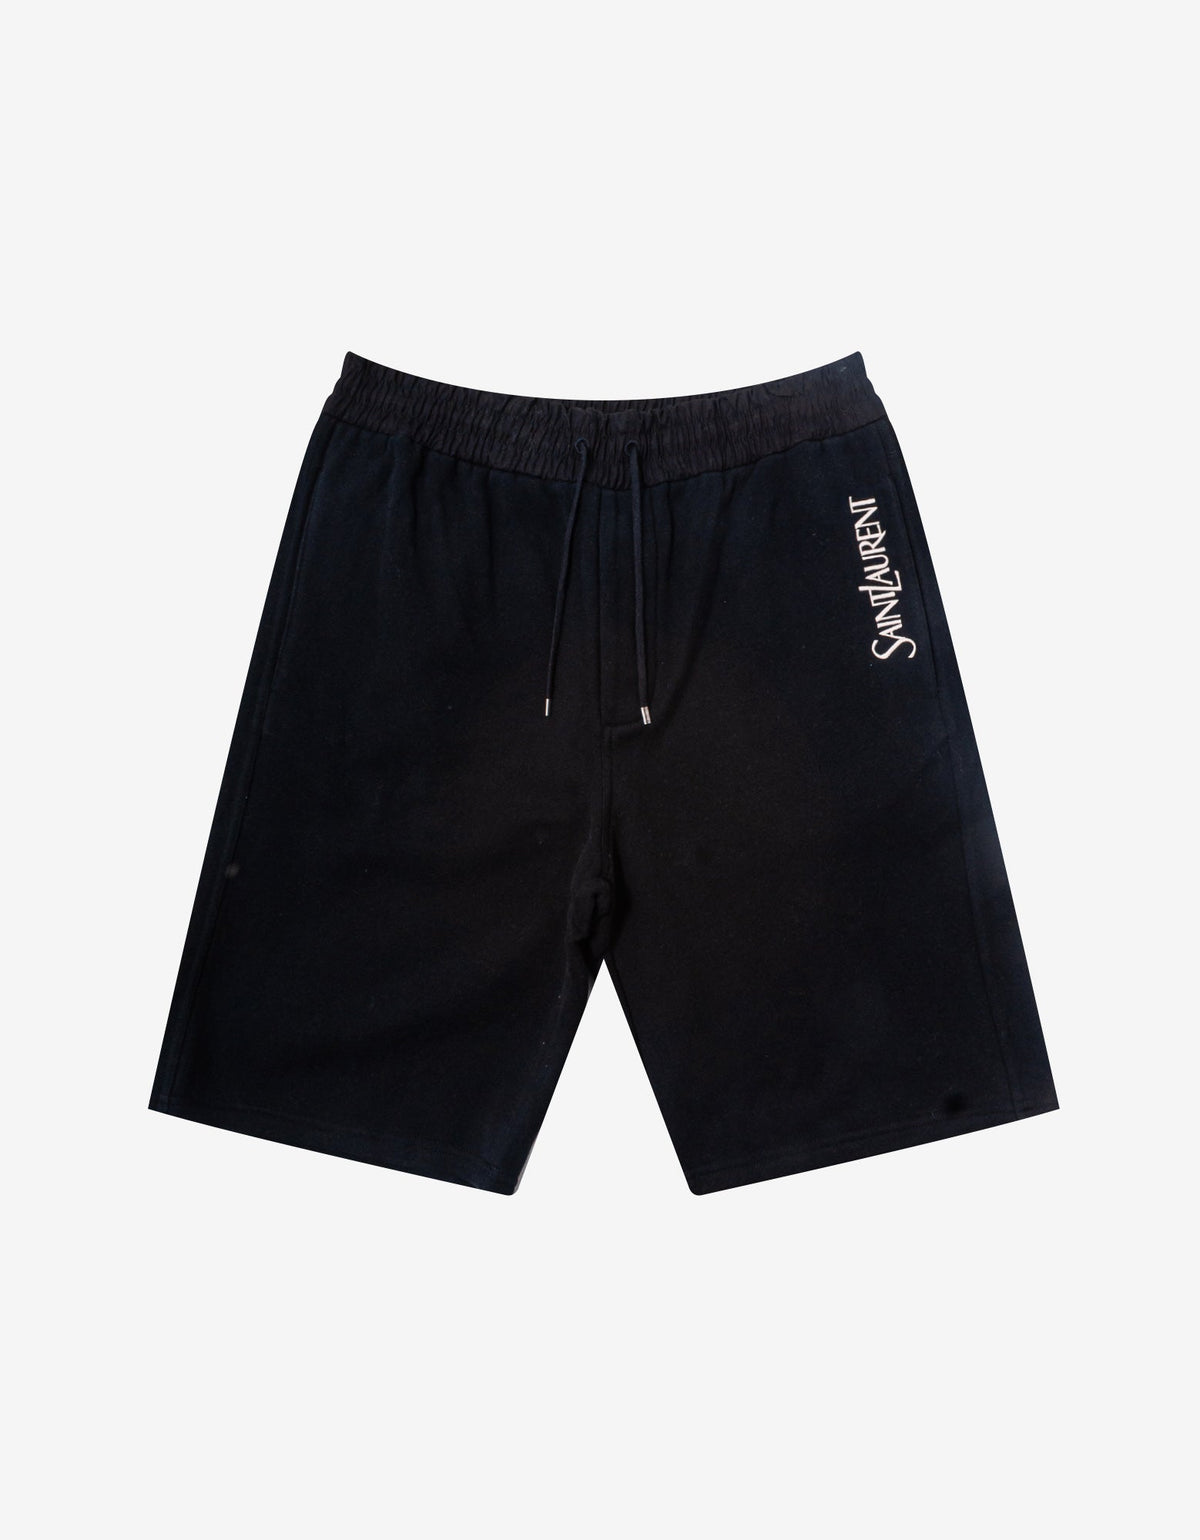 Saint Laurent Black Logo Sweat Shorts